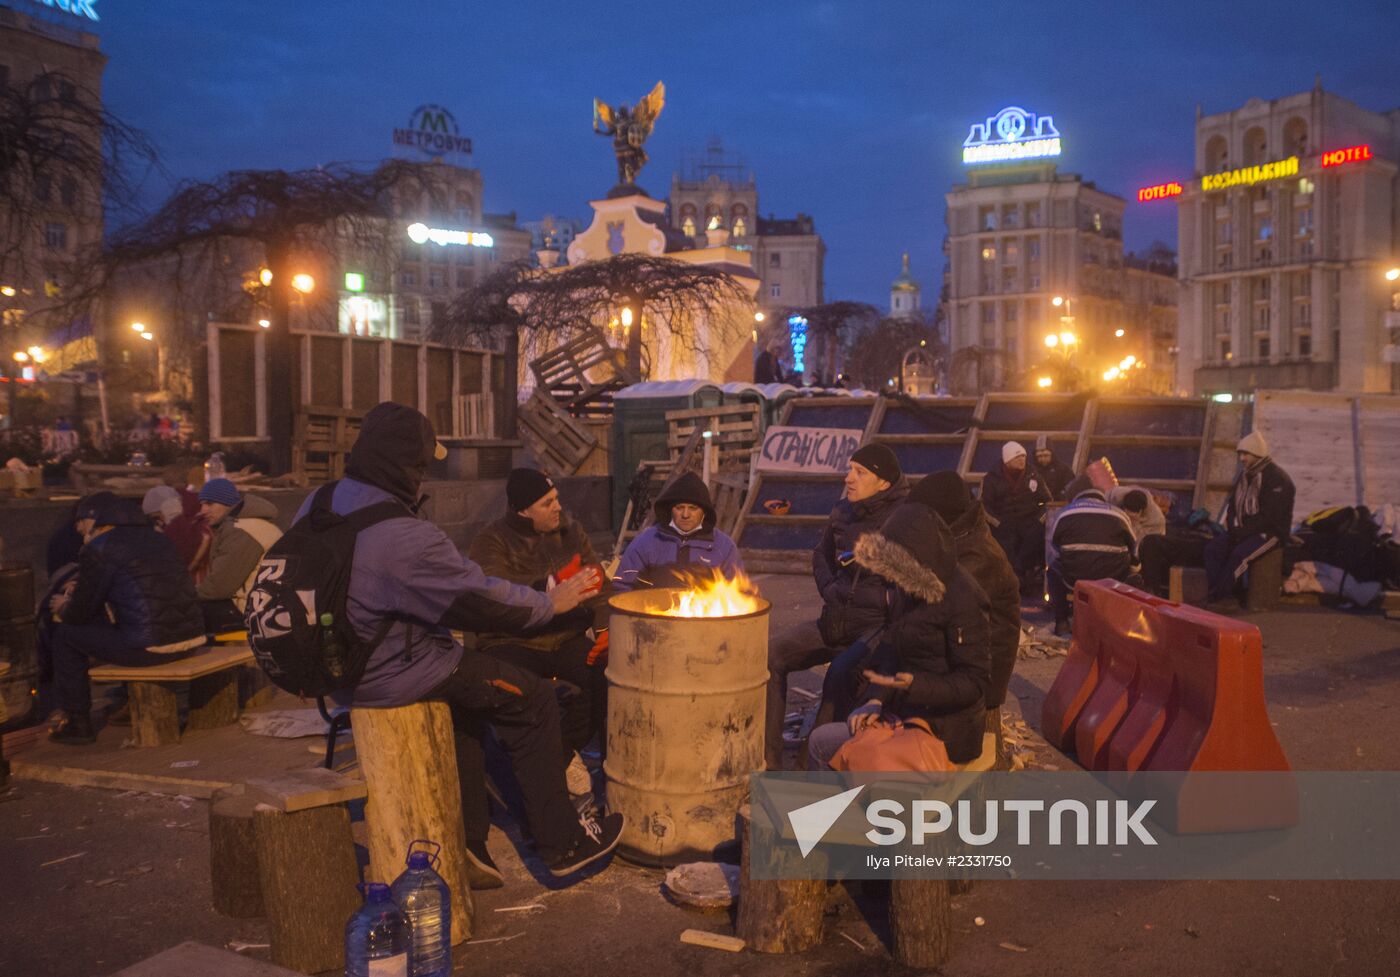 EU integration supporters rally in Kiev